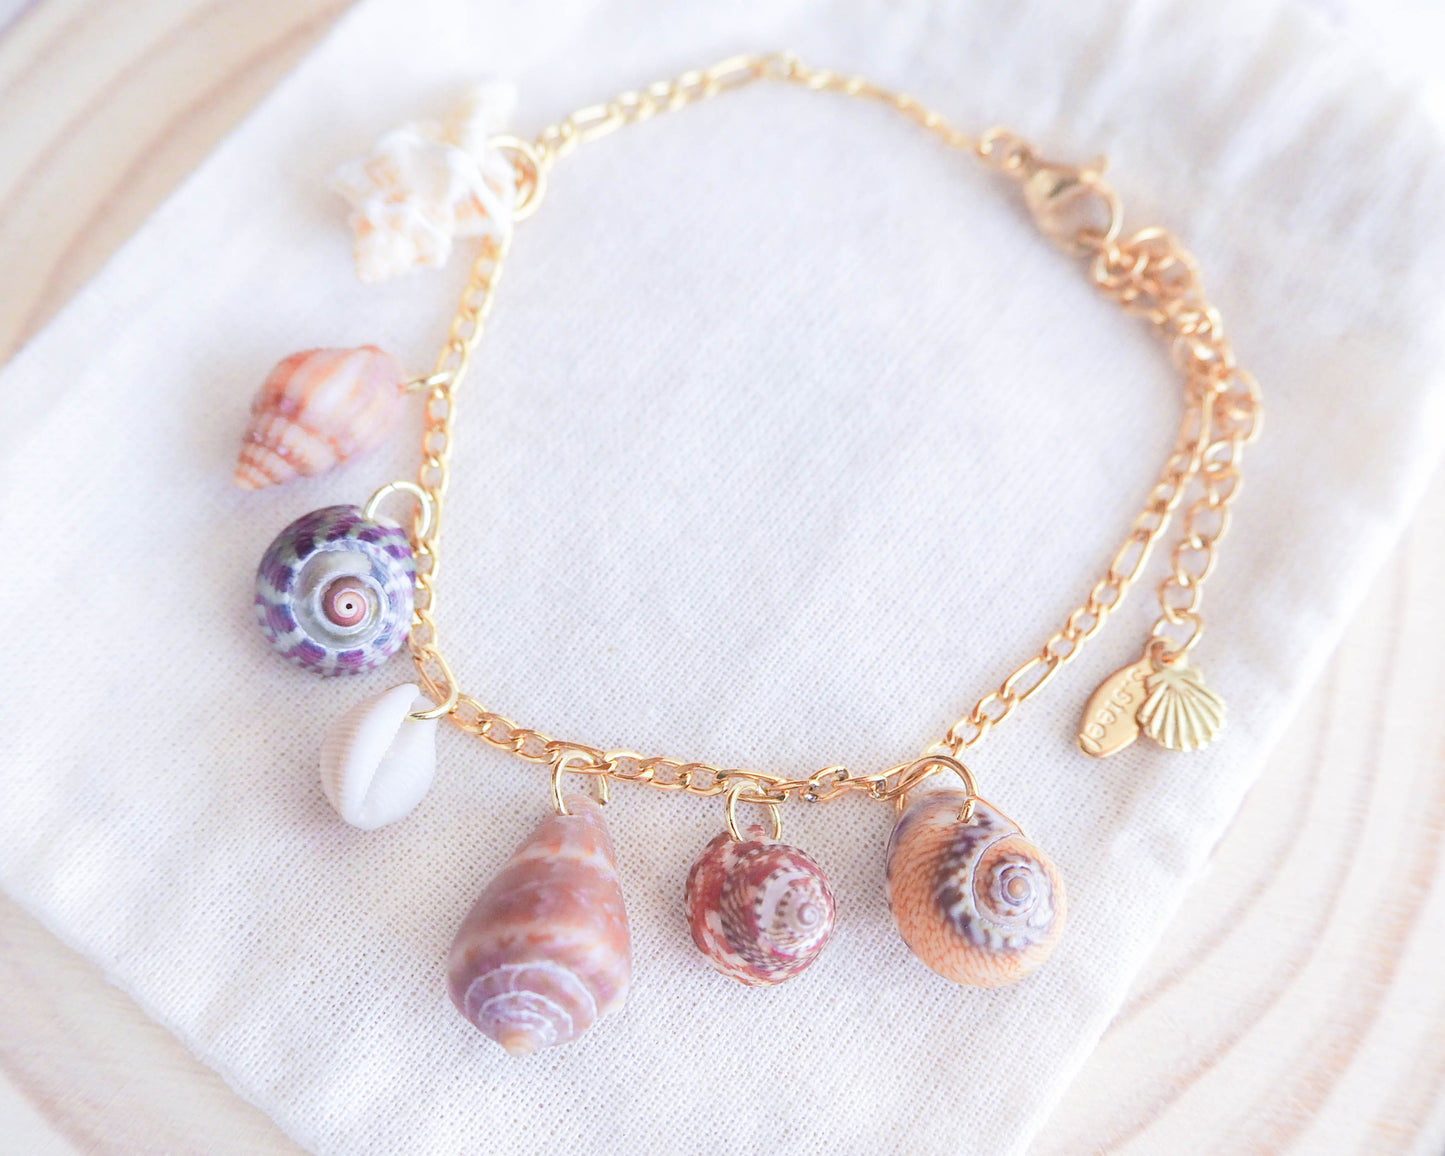 Seashell charm bracelet from Portugal 